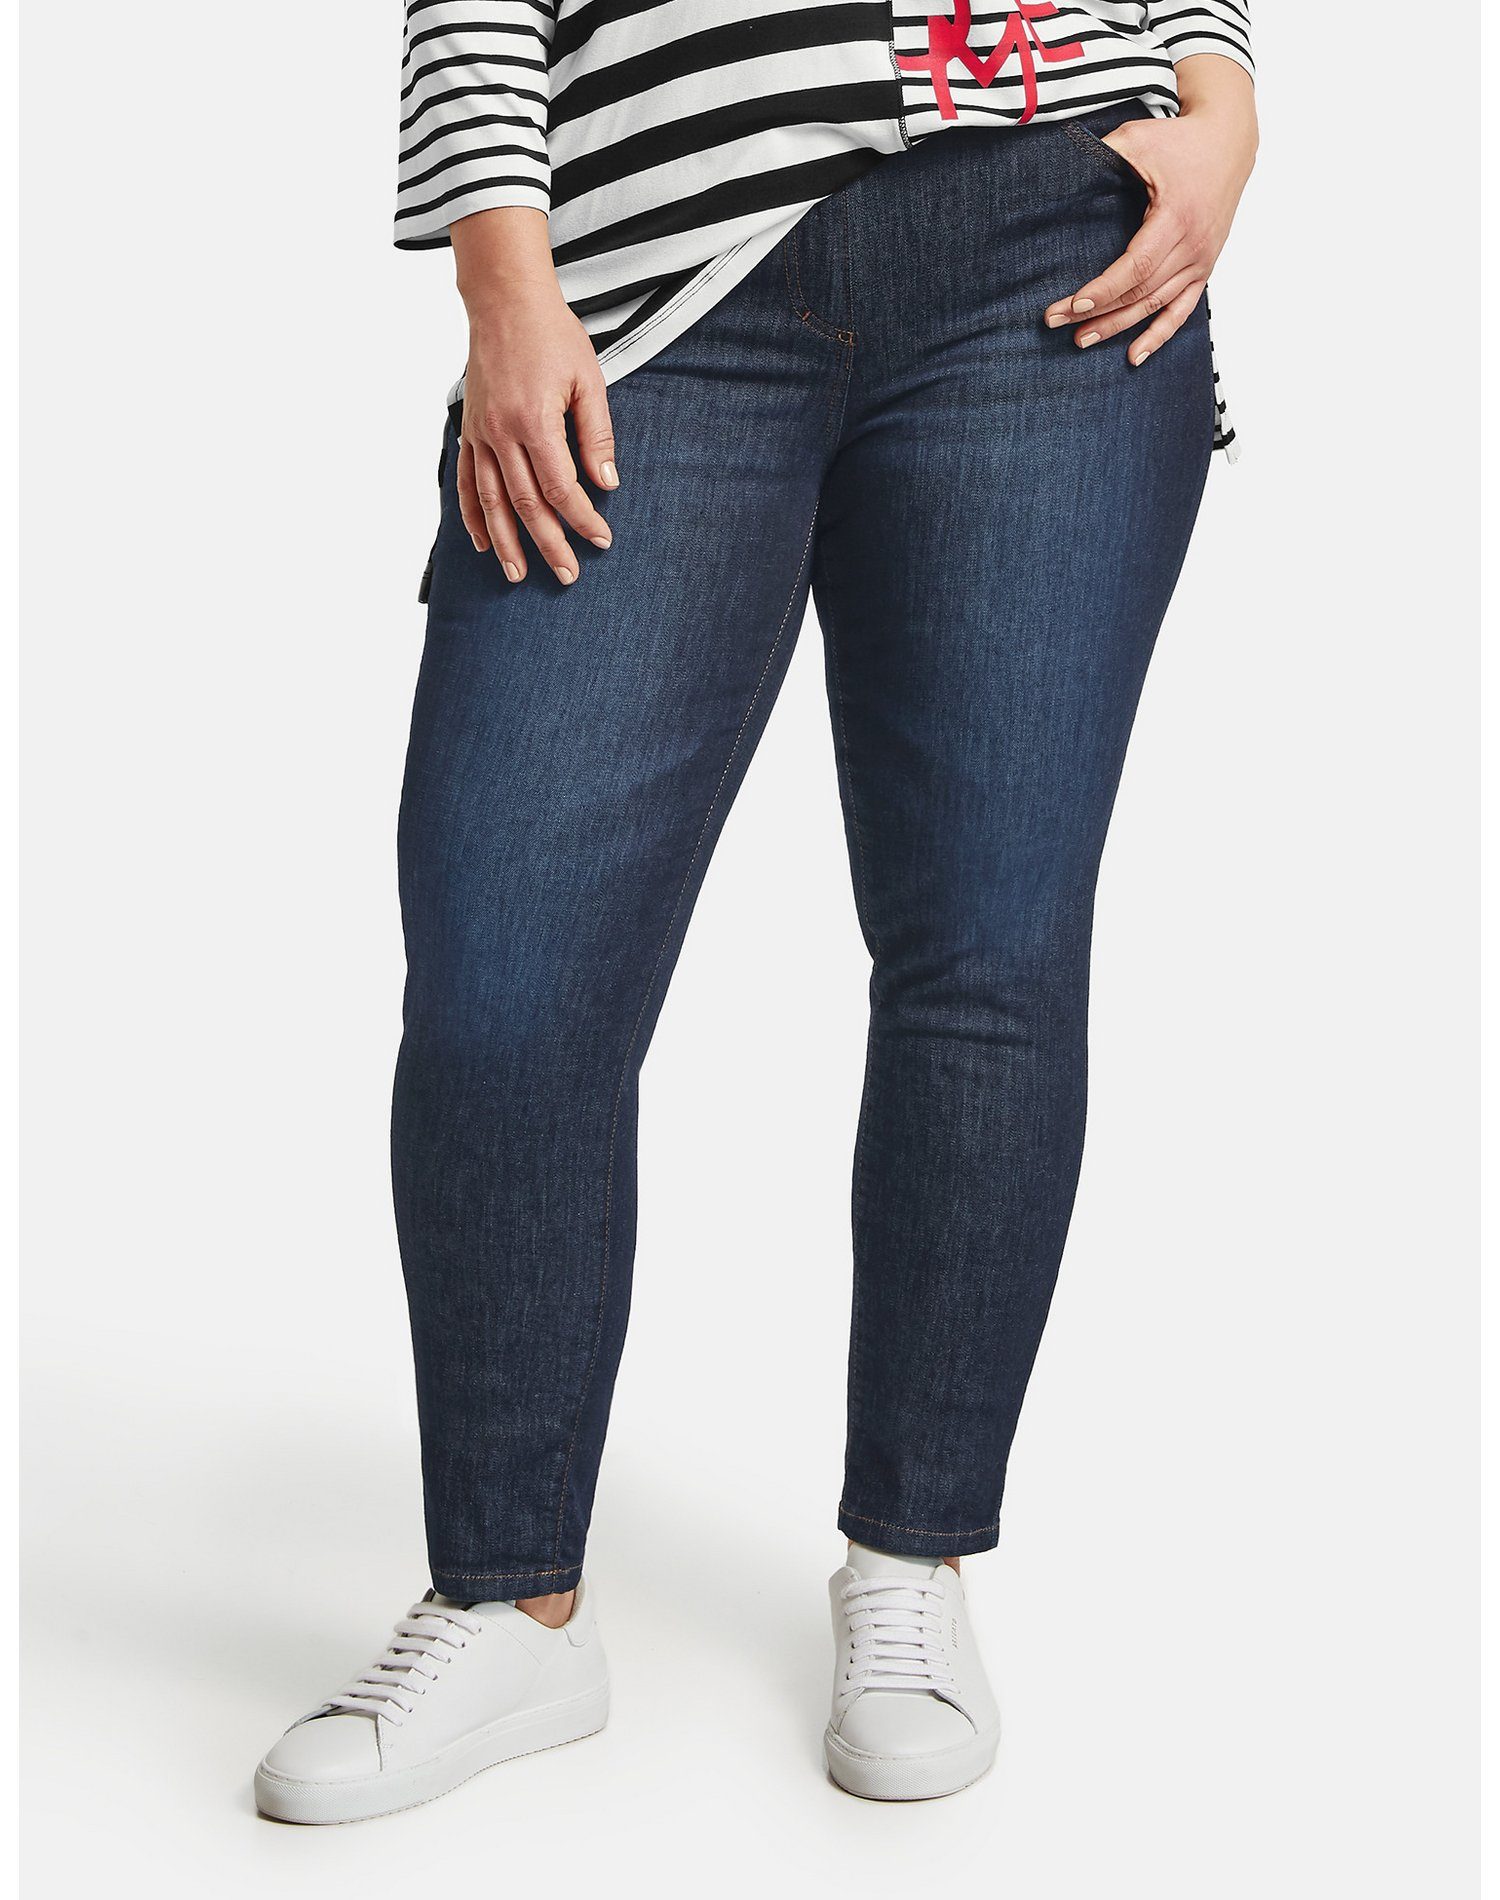 Samoon Stretch-Jeans »Betty Jeans mit dezentem Washed-Out-Effekt« (1-tlg)  5-Pocket online kaufen | OTTO